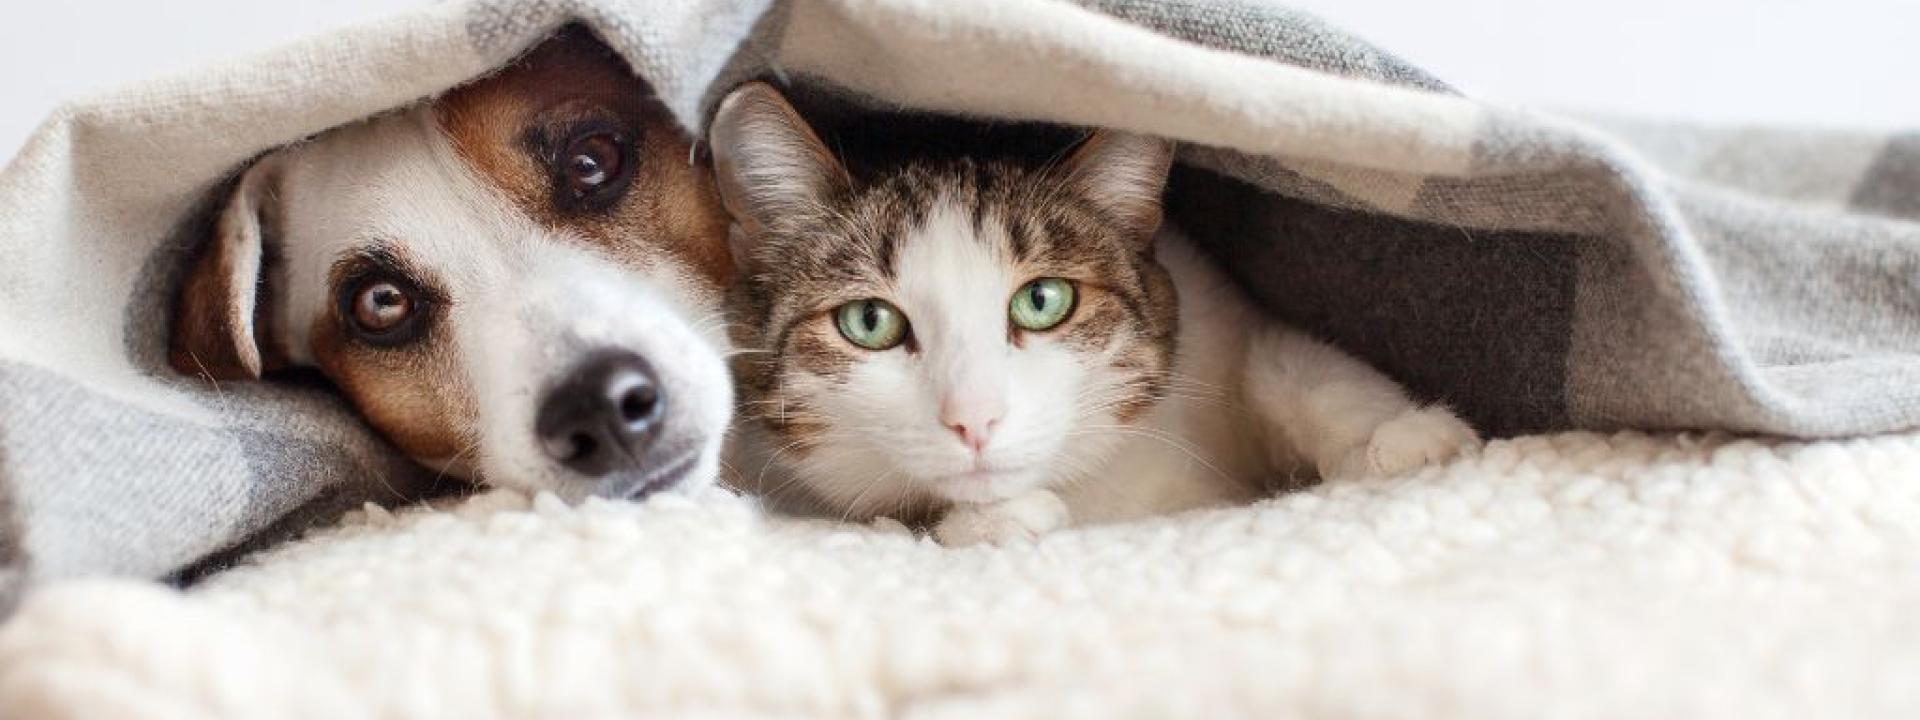 Senior dog and cat hiding under blanket